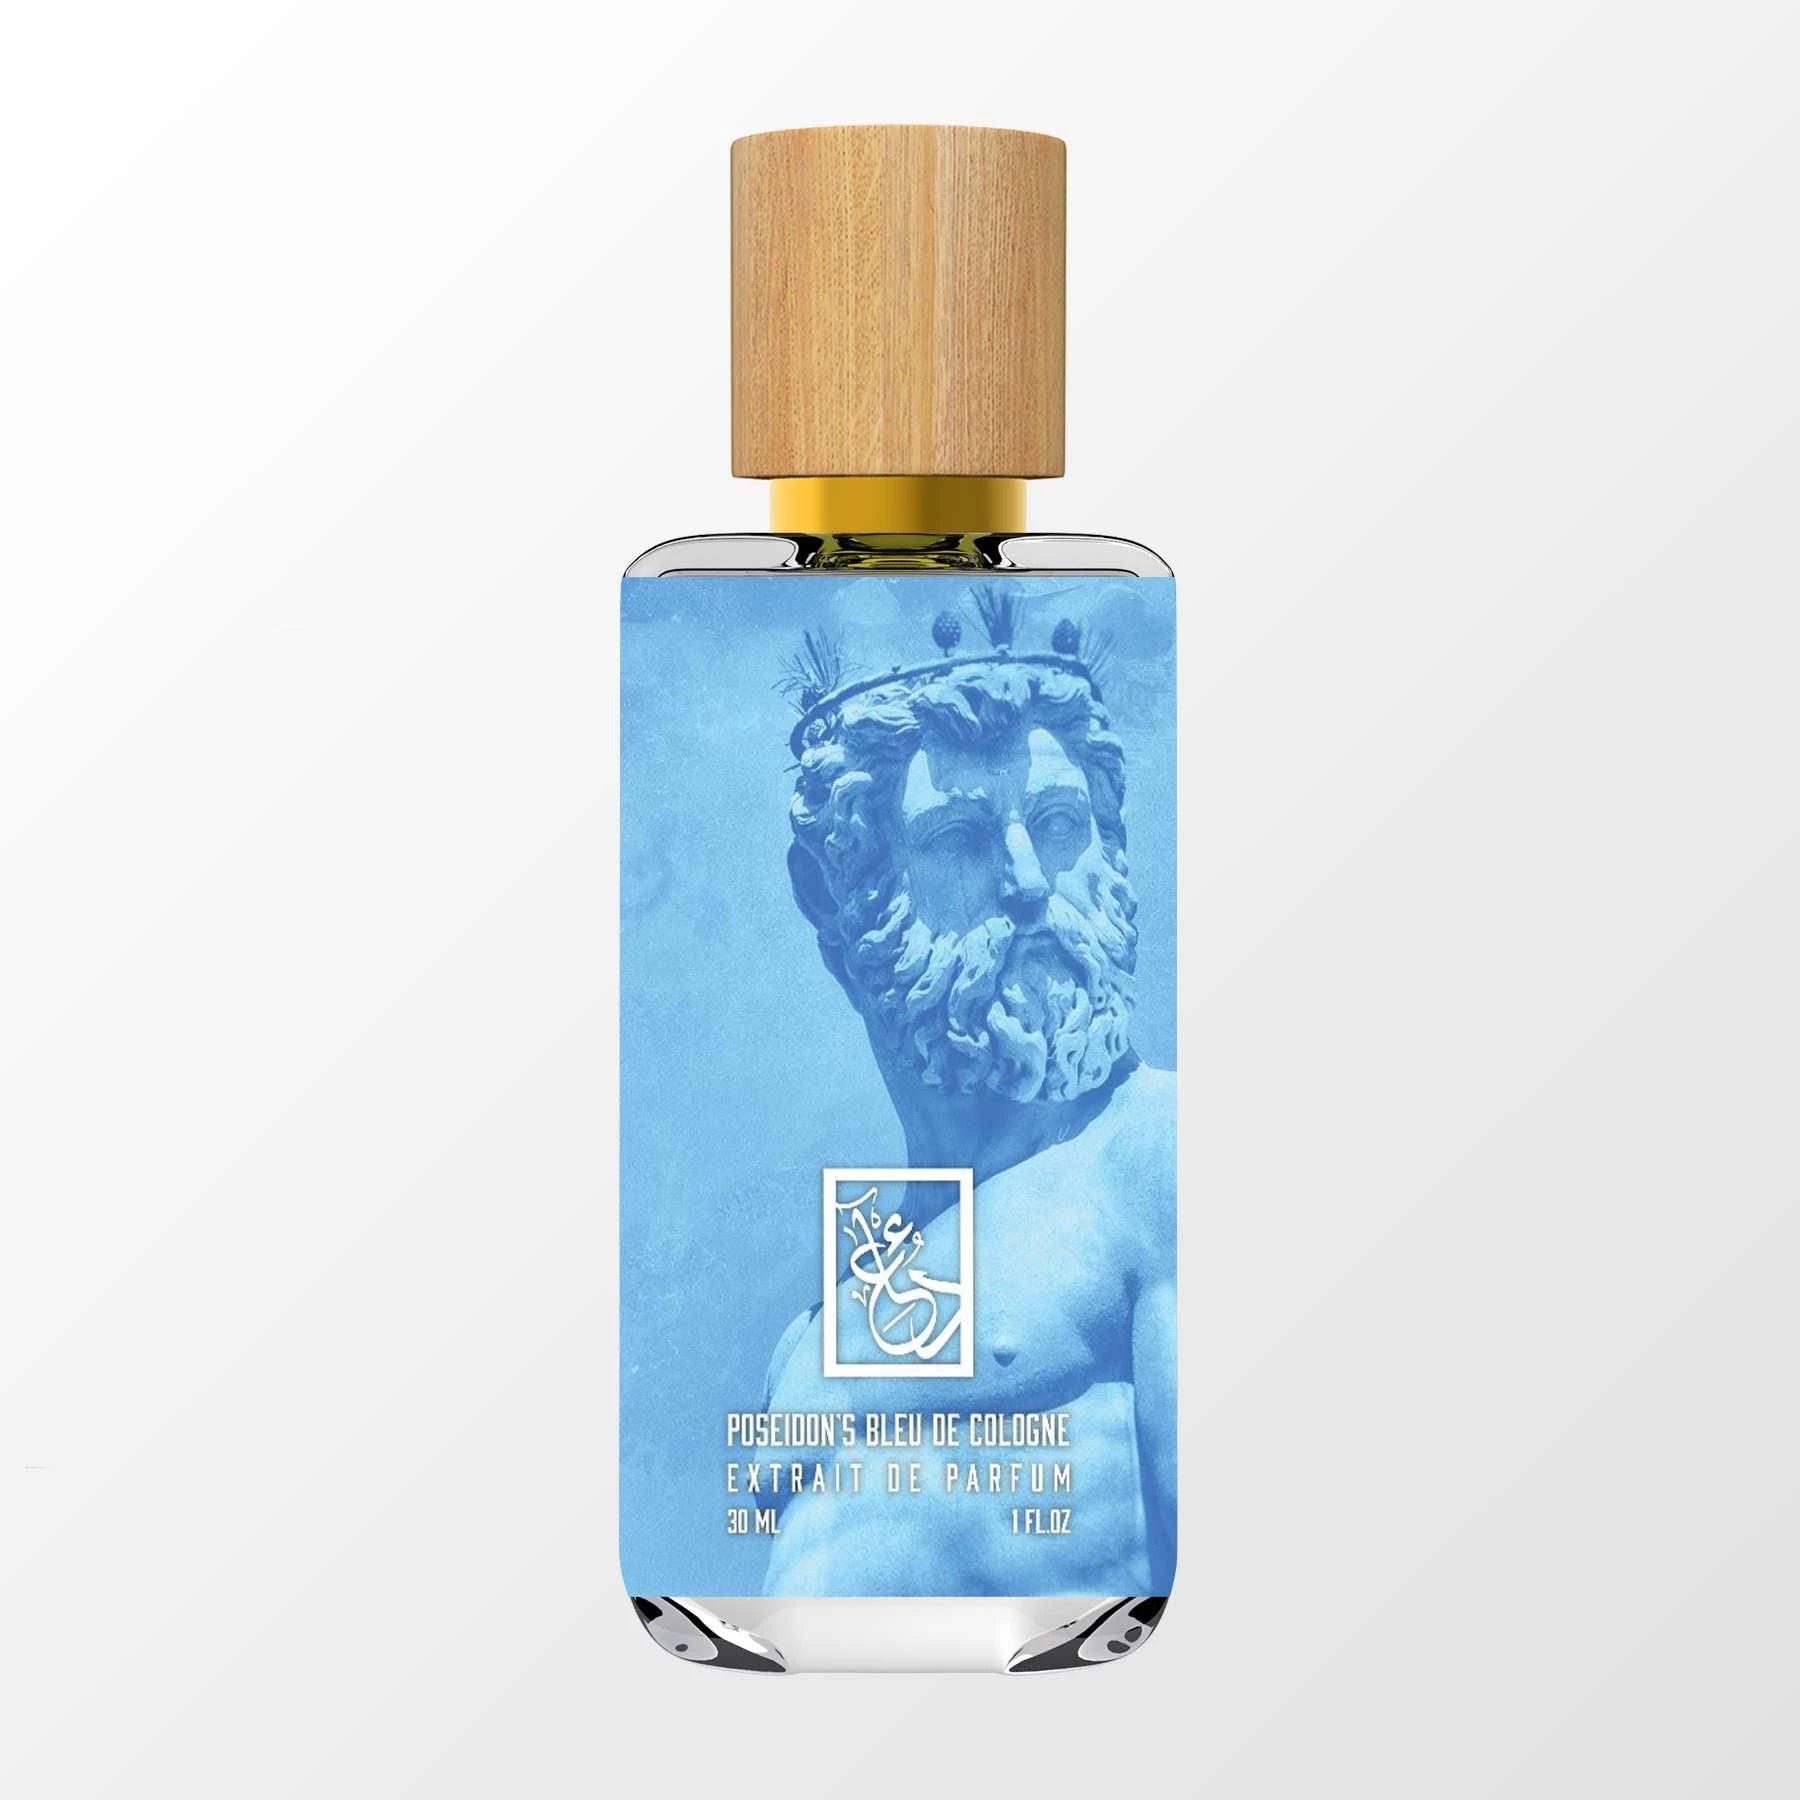 Poseidon’s Bleu de Cologne